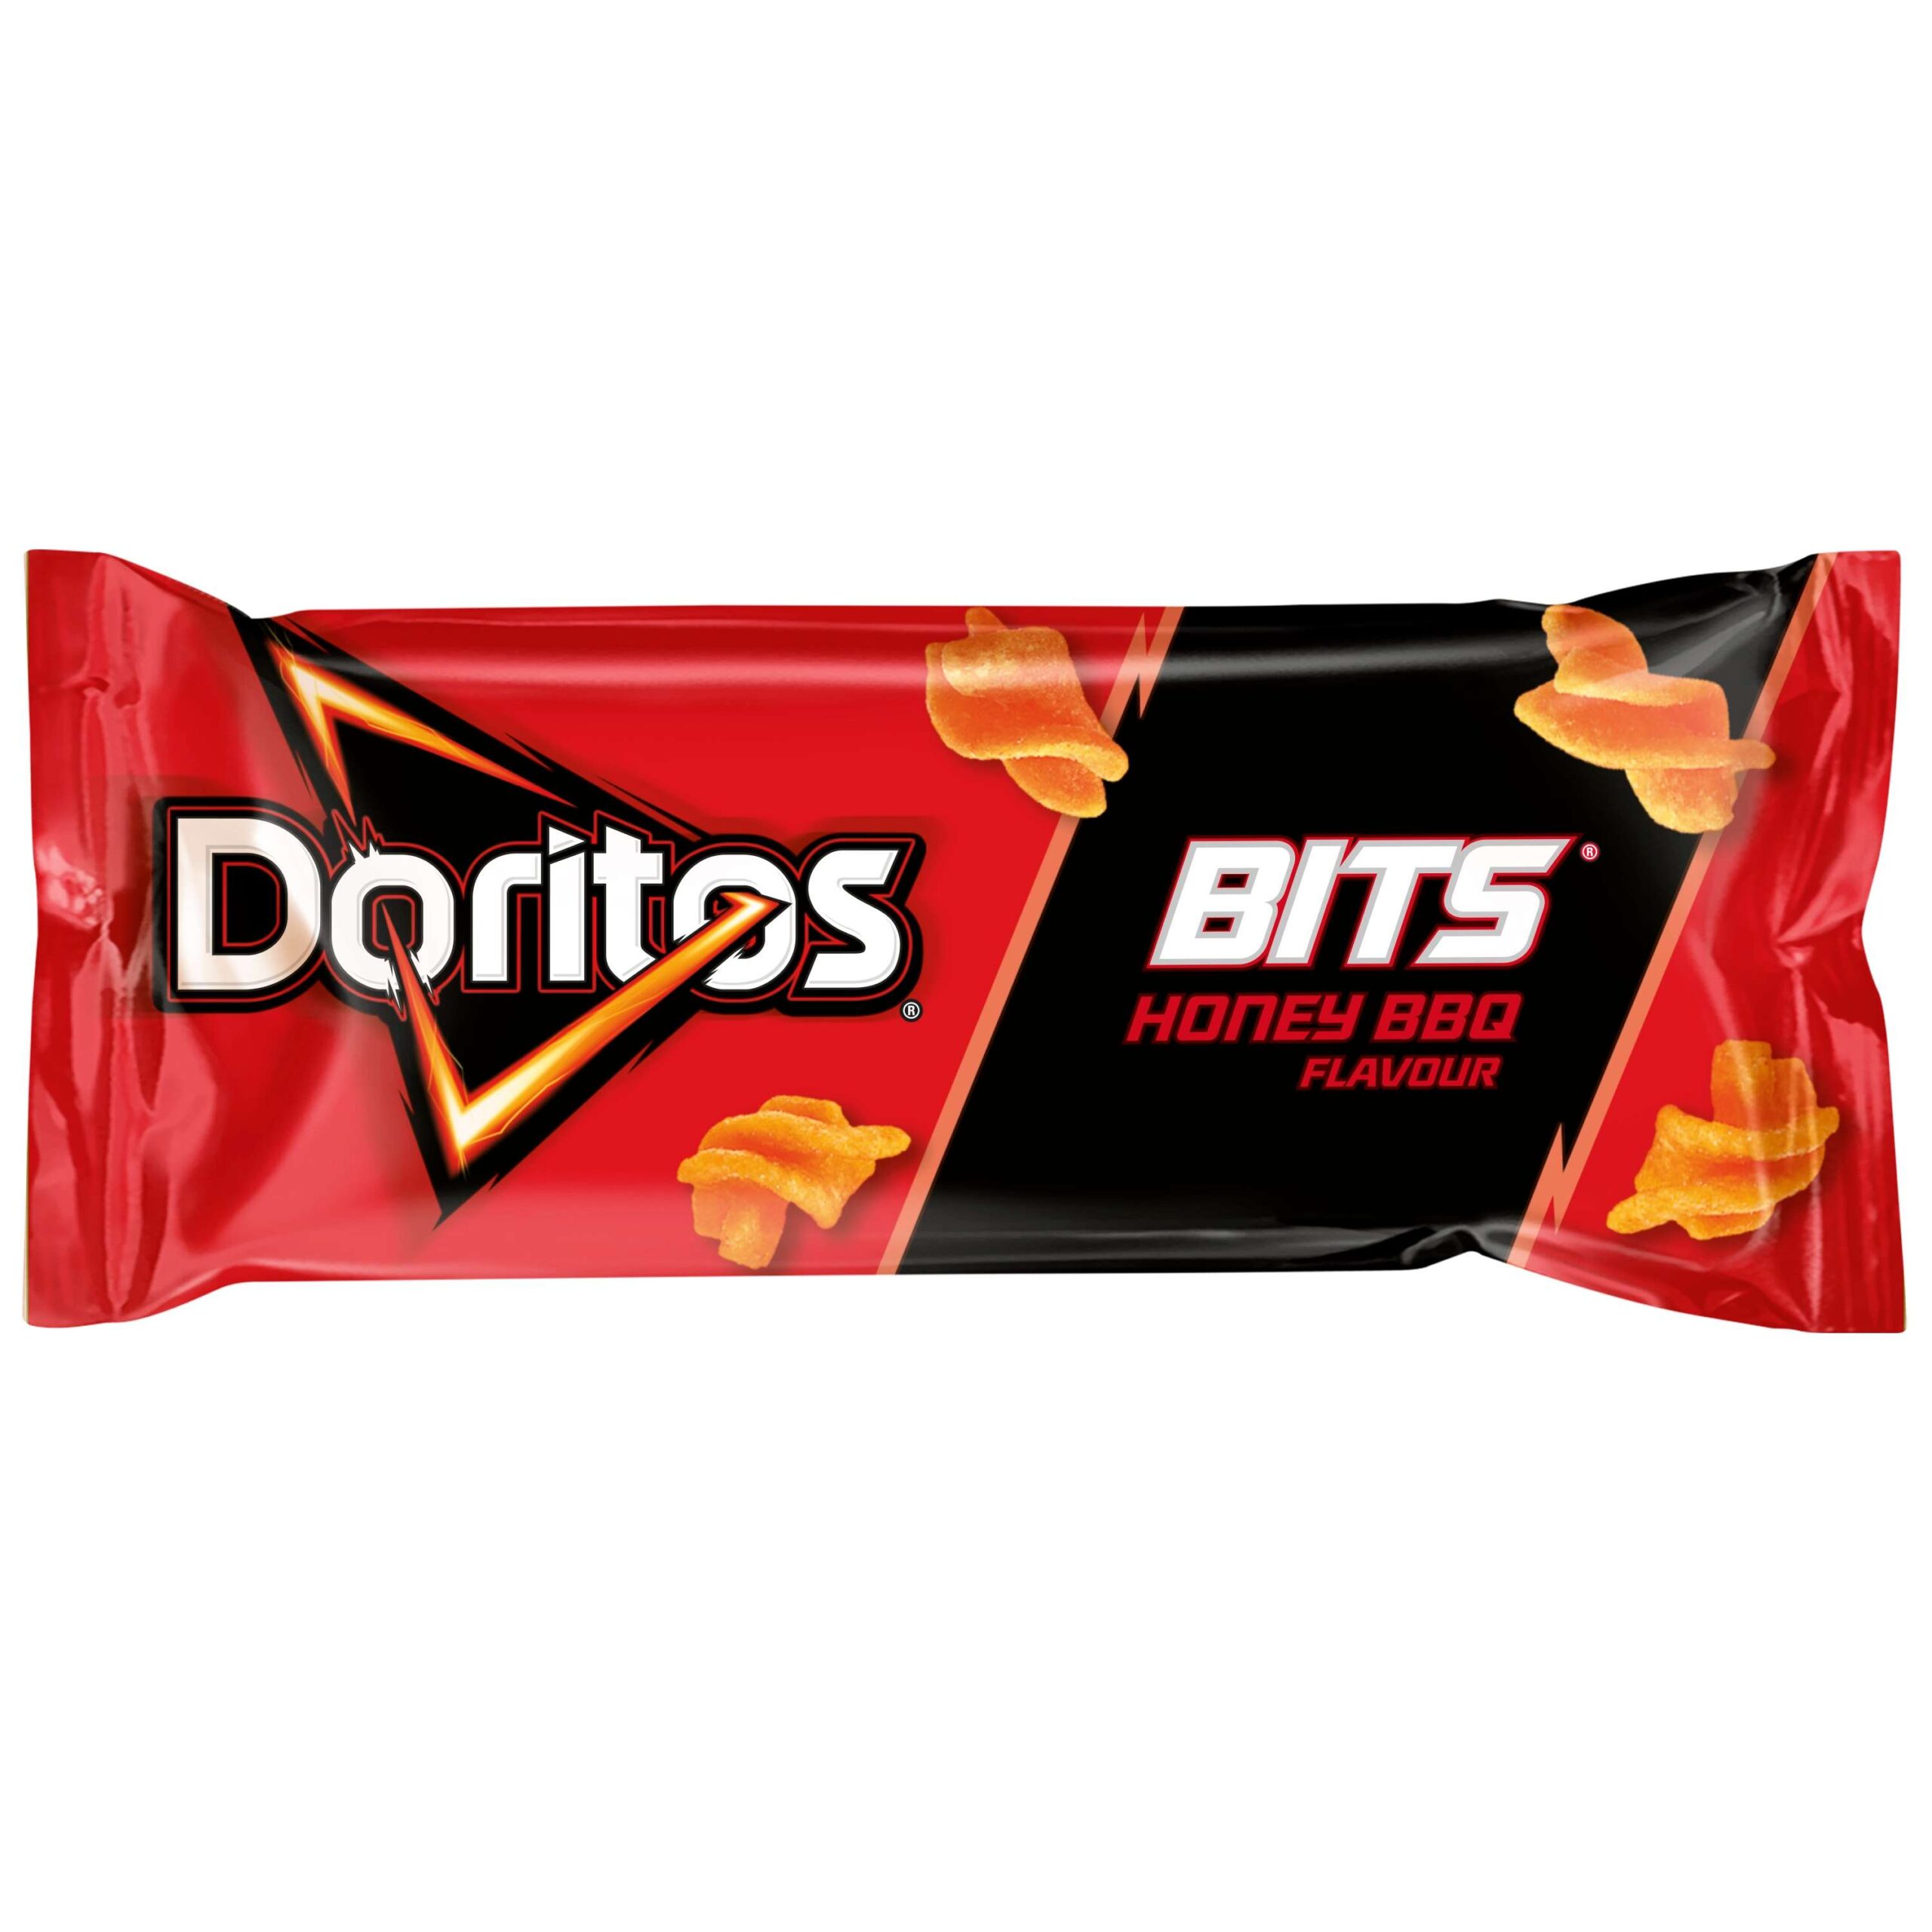 Doritos Bits Twisties honey bbq 30gr scaled